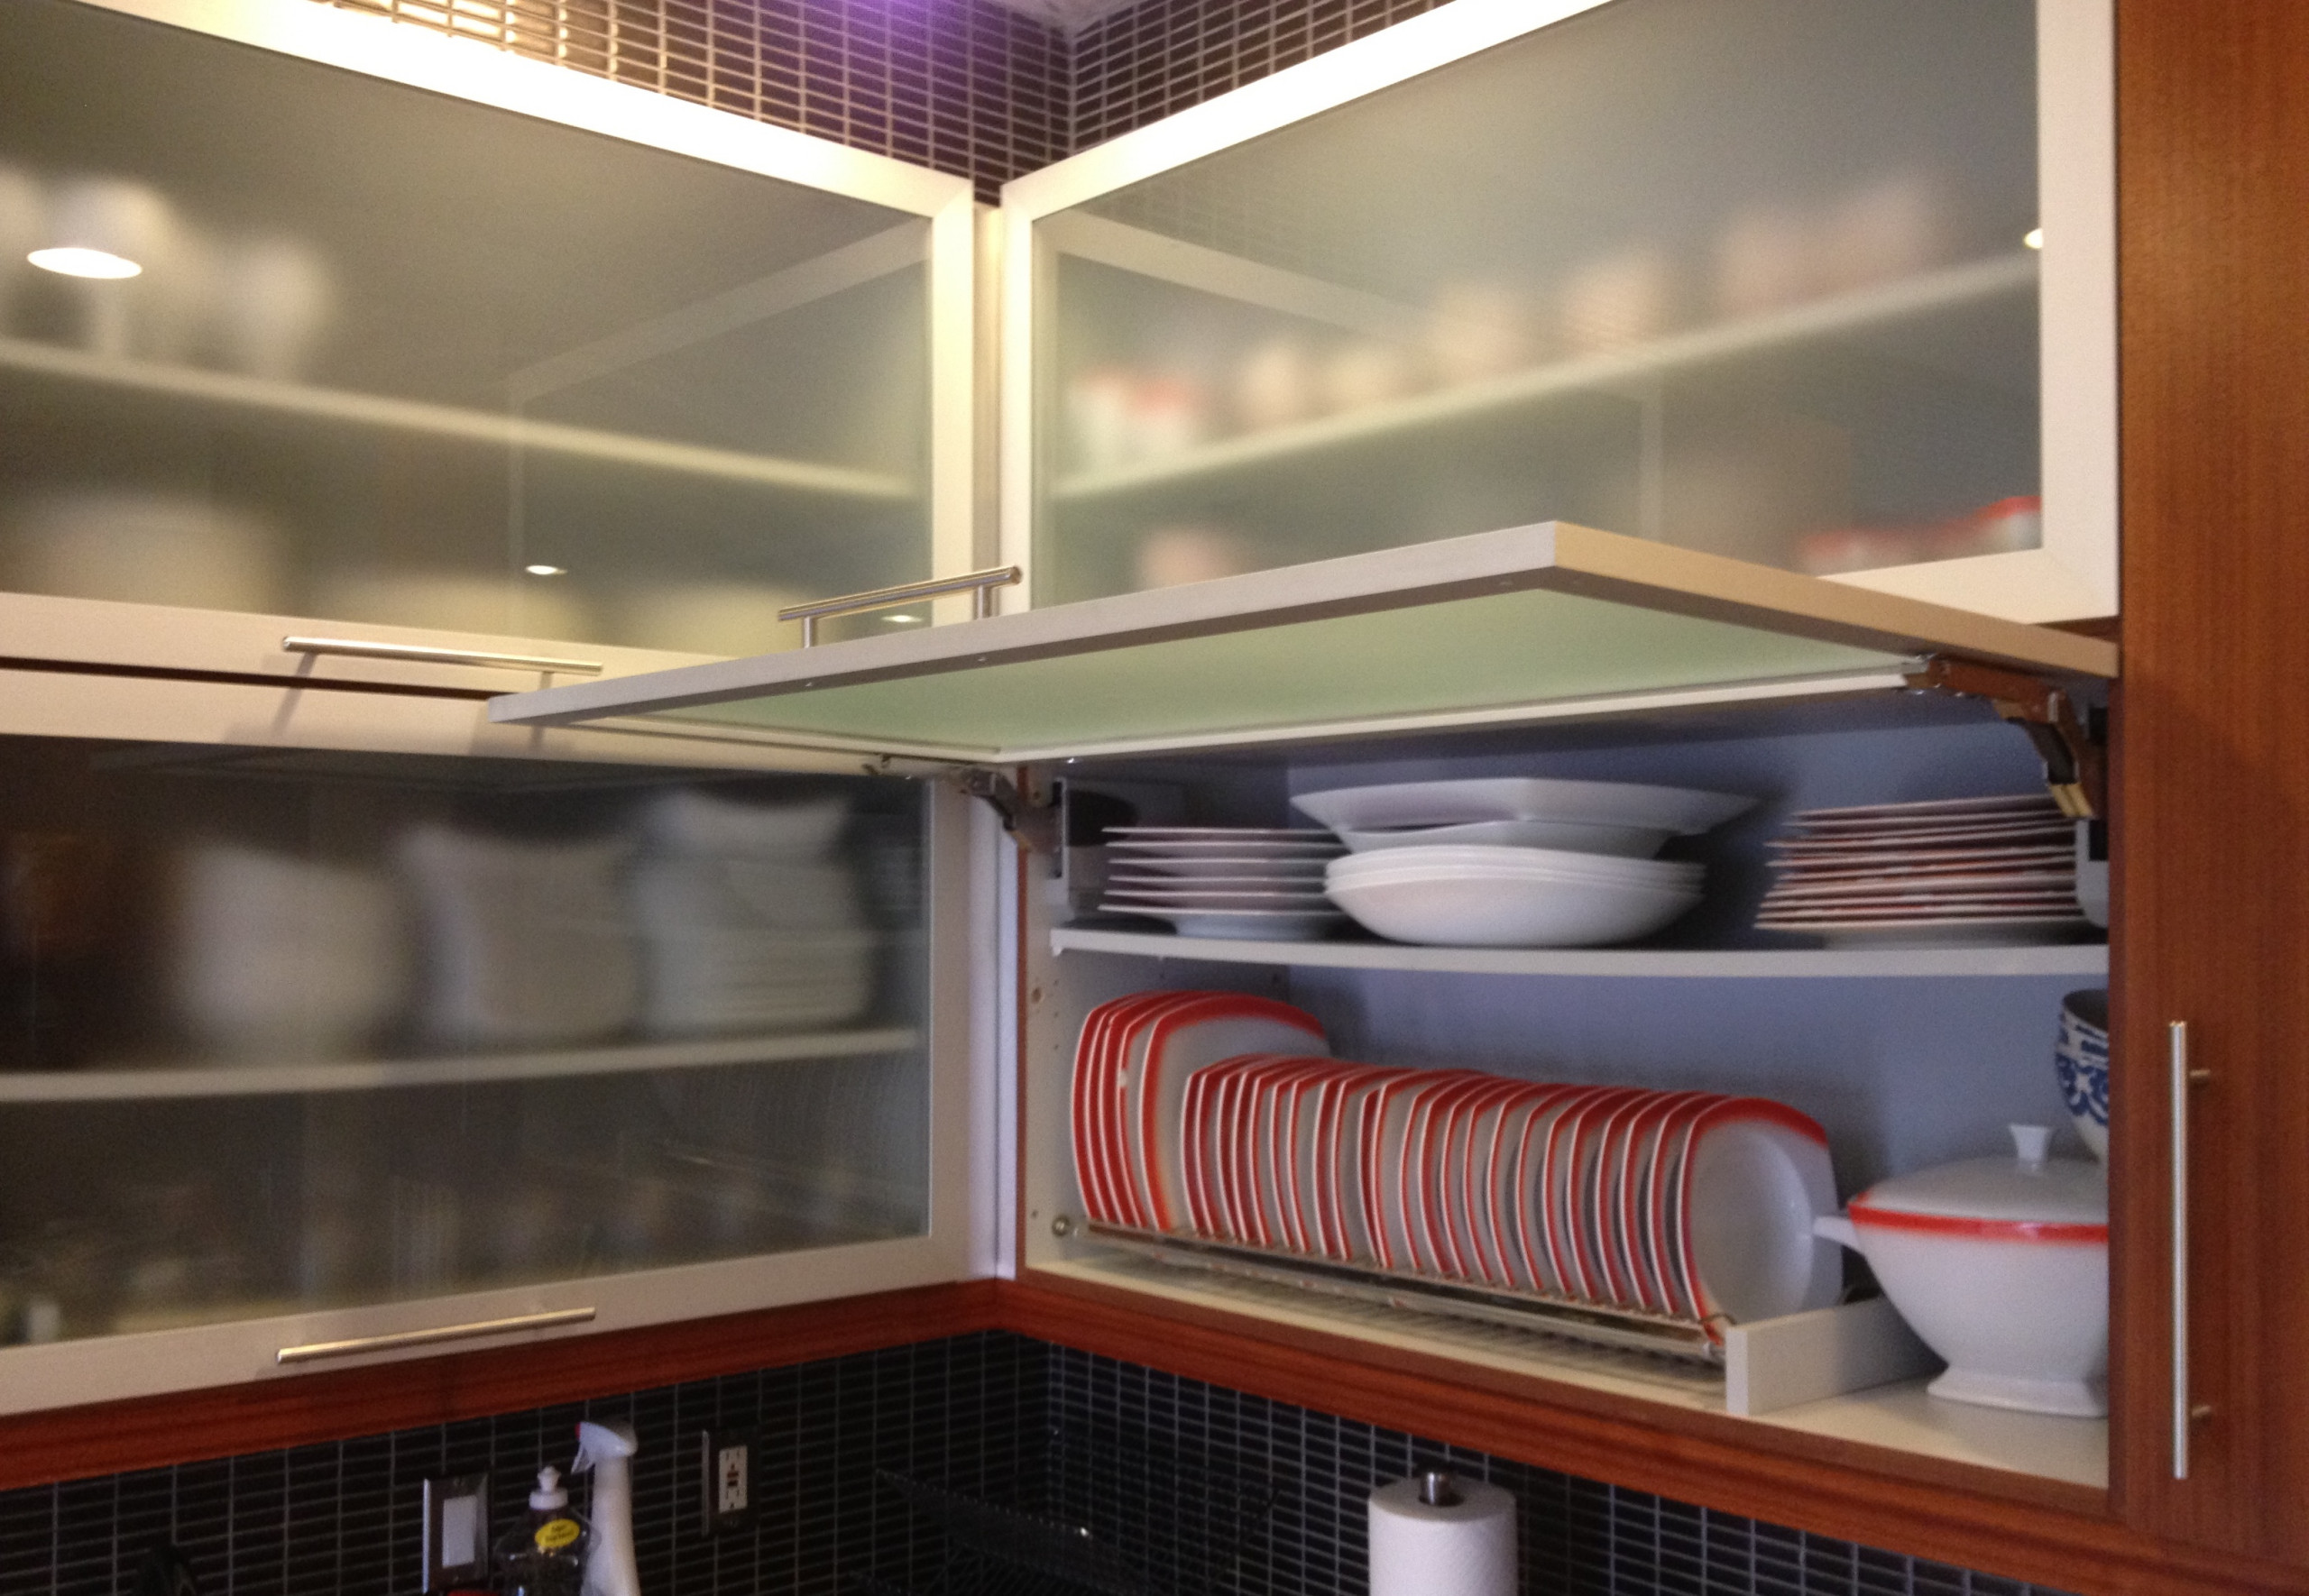 kitchen storage lift up system plate